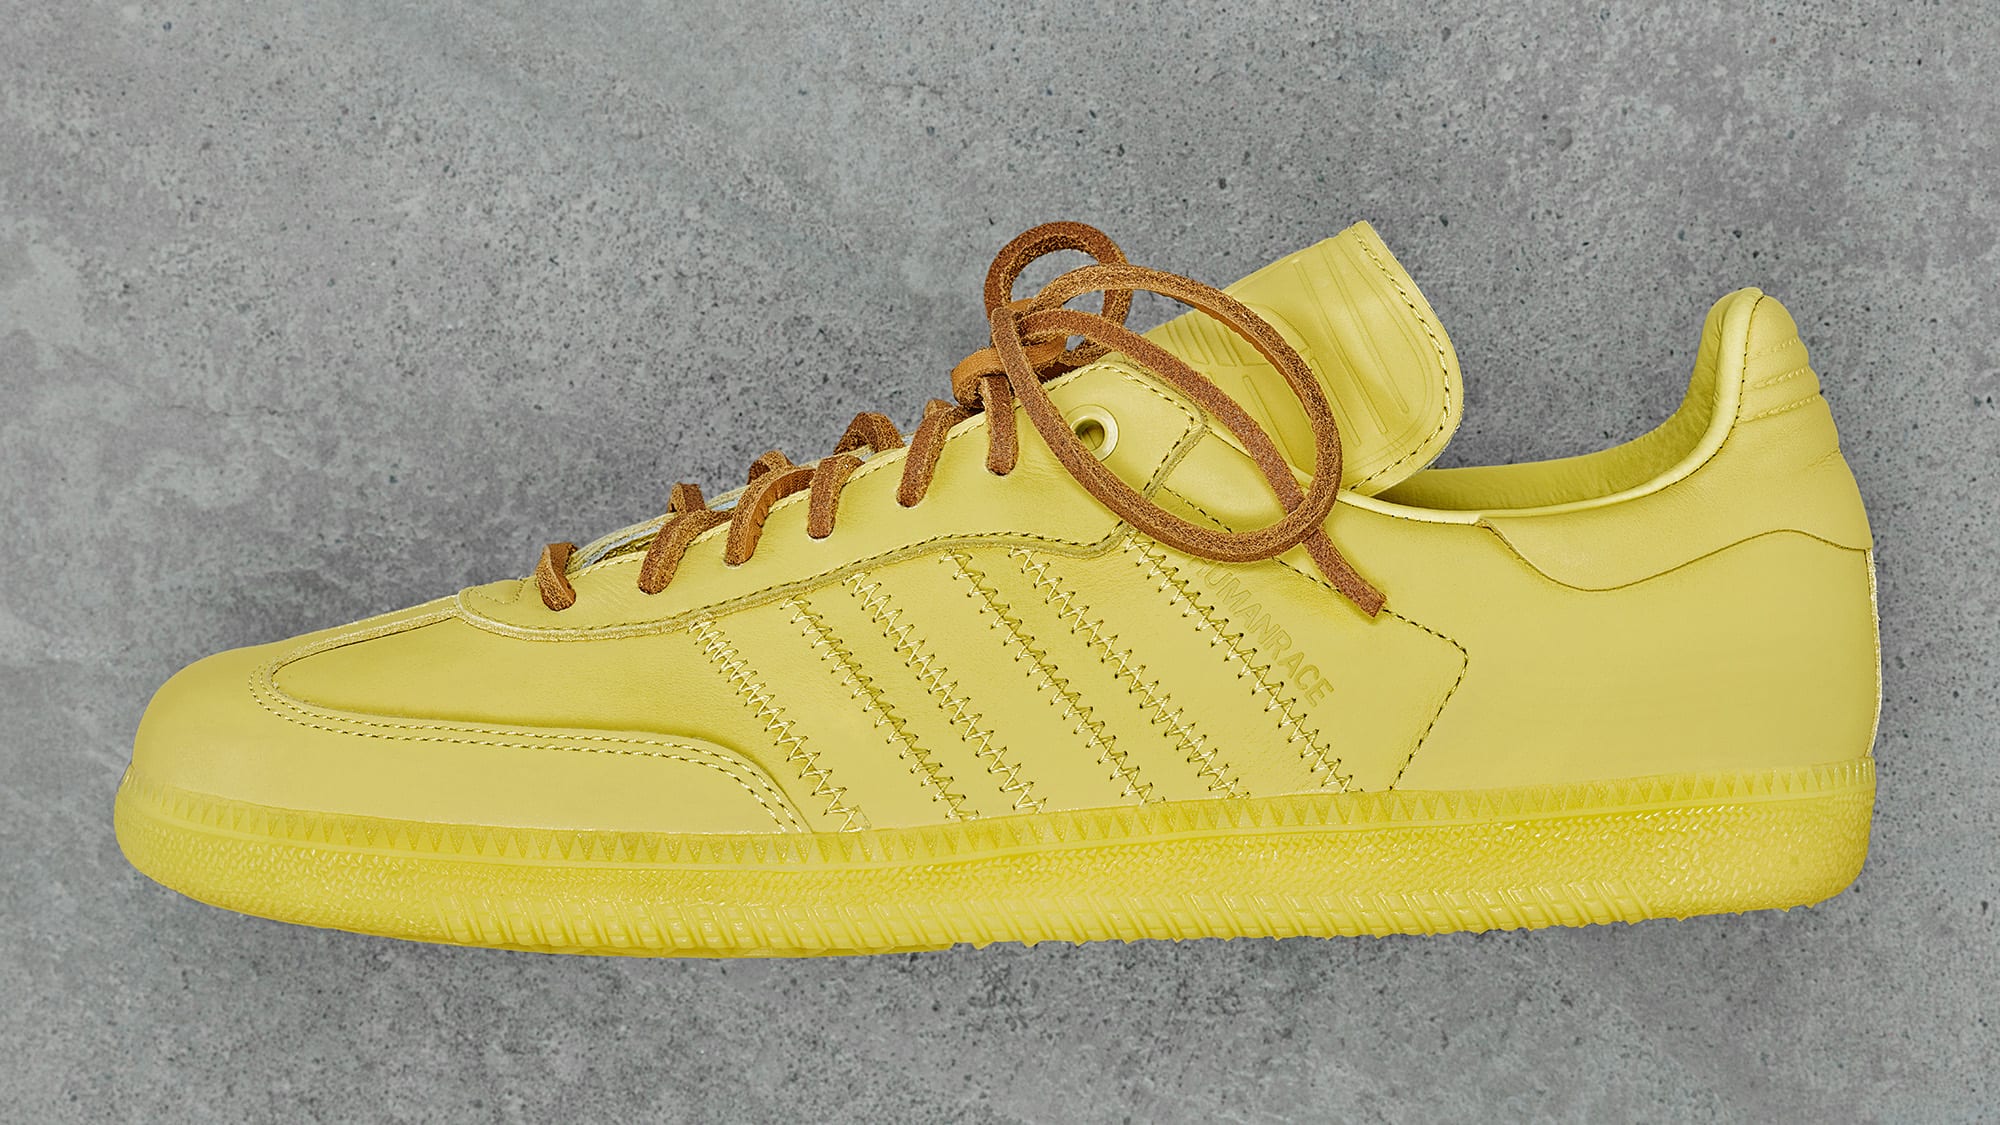 Adidas x Pharrell Williams Samba Sneakers | New Season Sneakers 45 / Light Beige